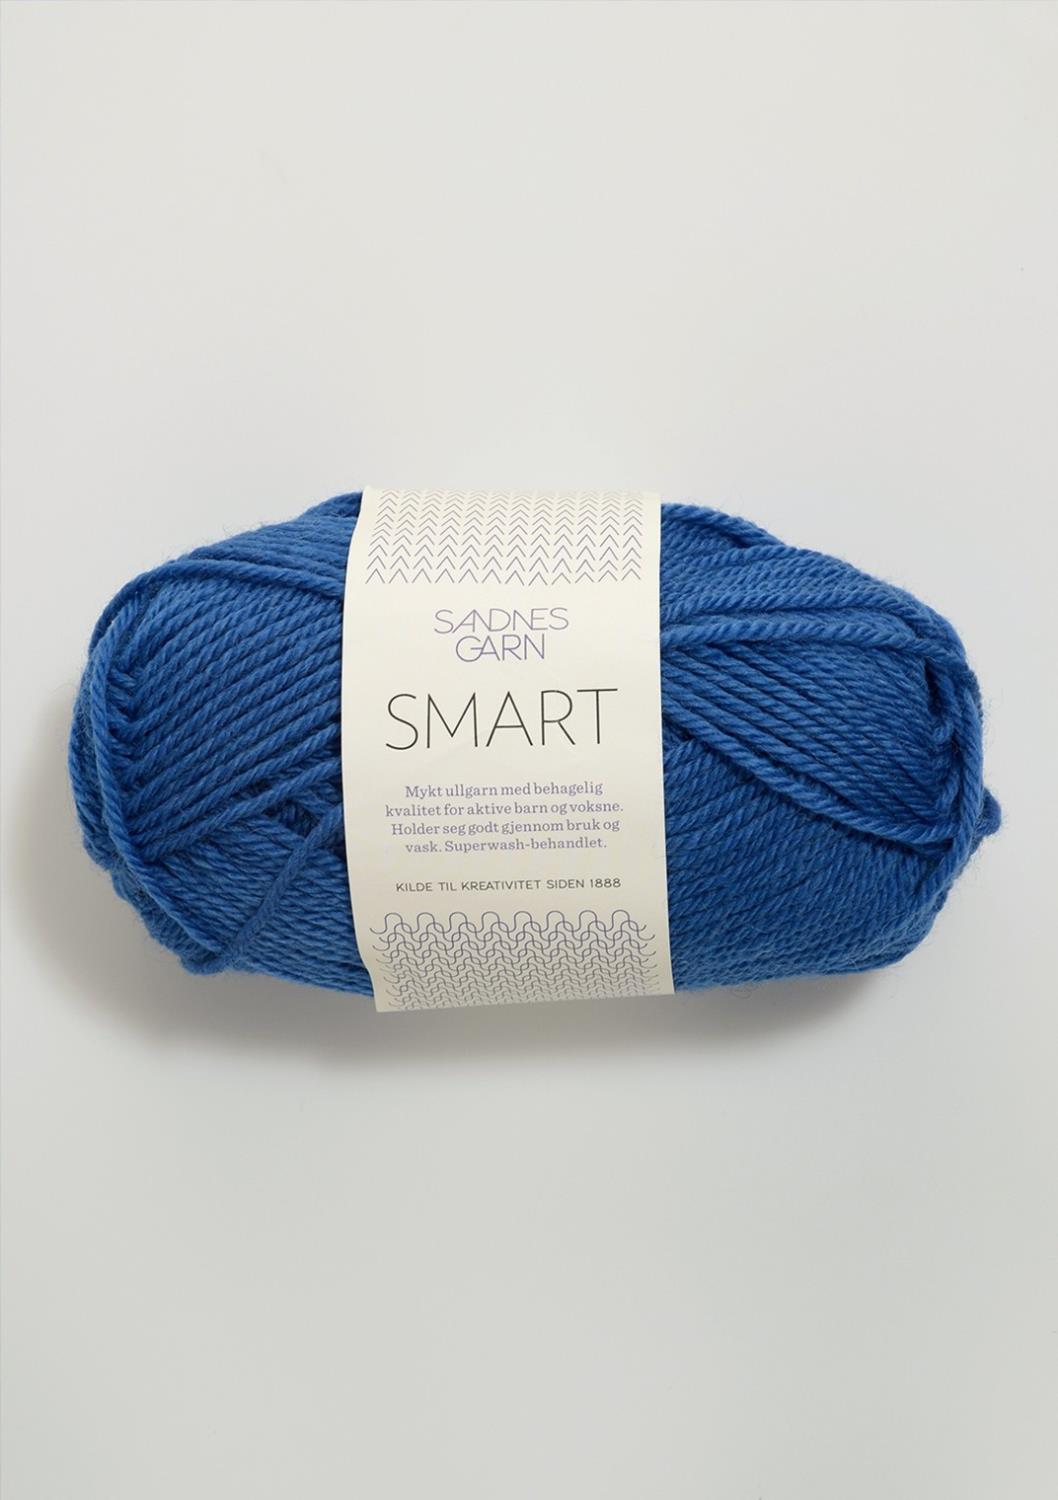 Smart Sandnes 5936 - Blå